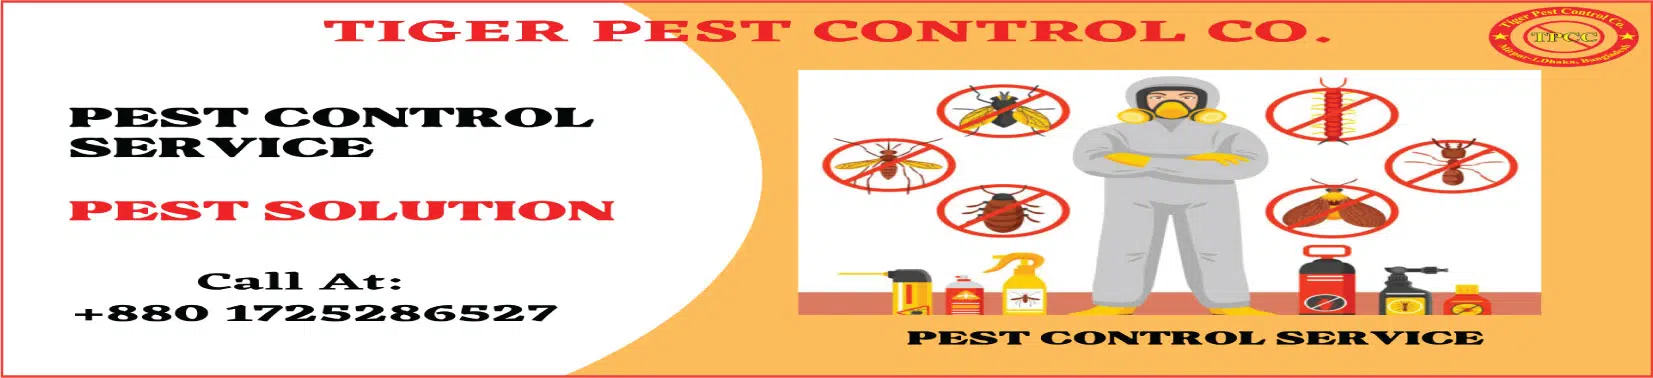 Tiger Pest Control Co. Ad